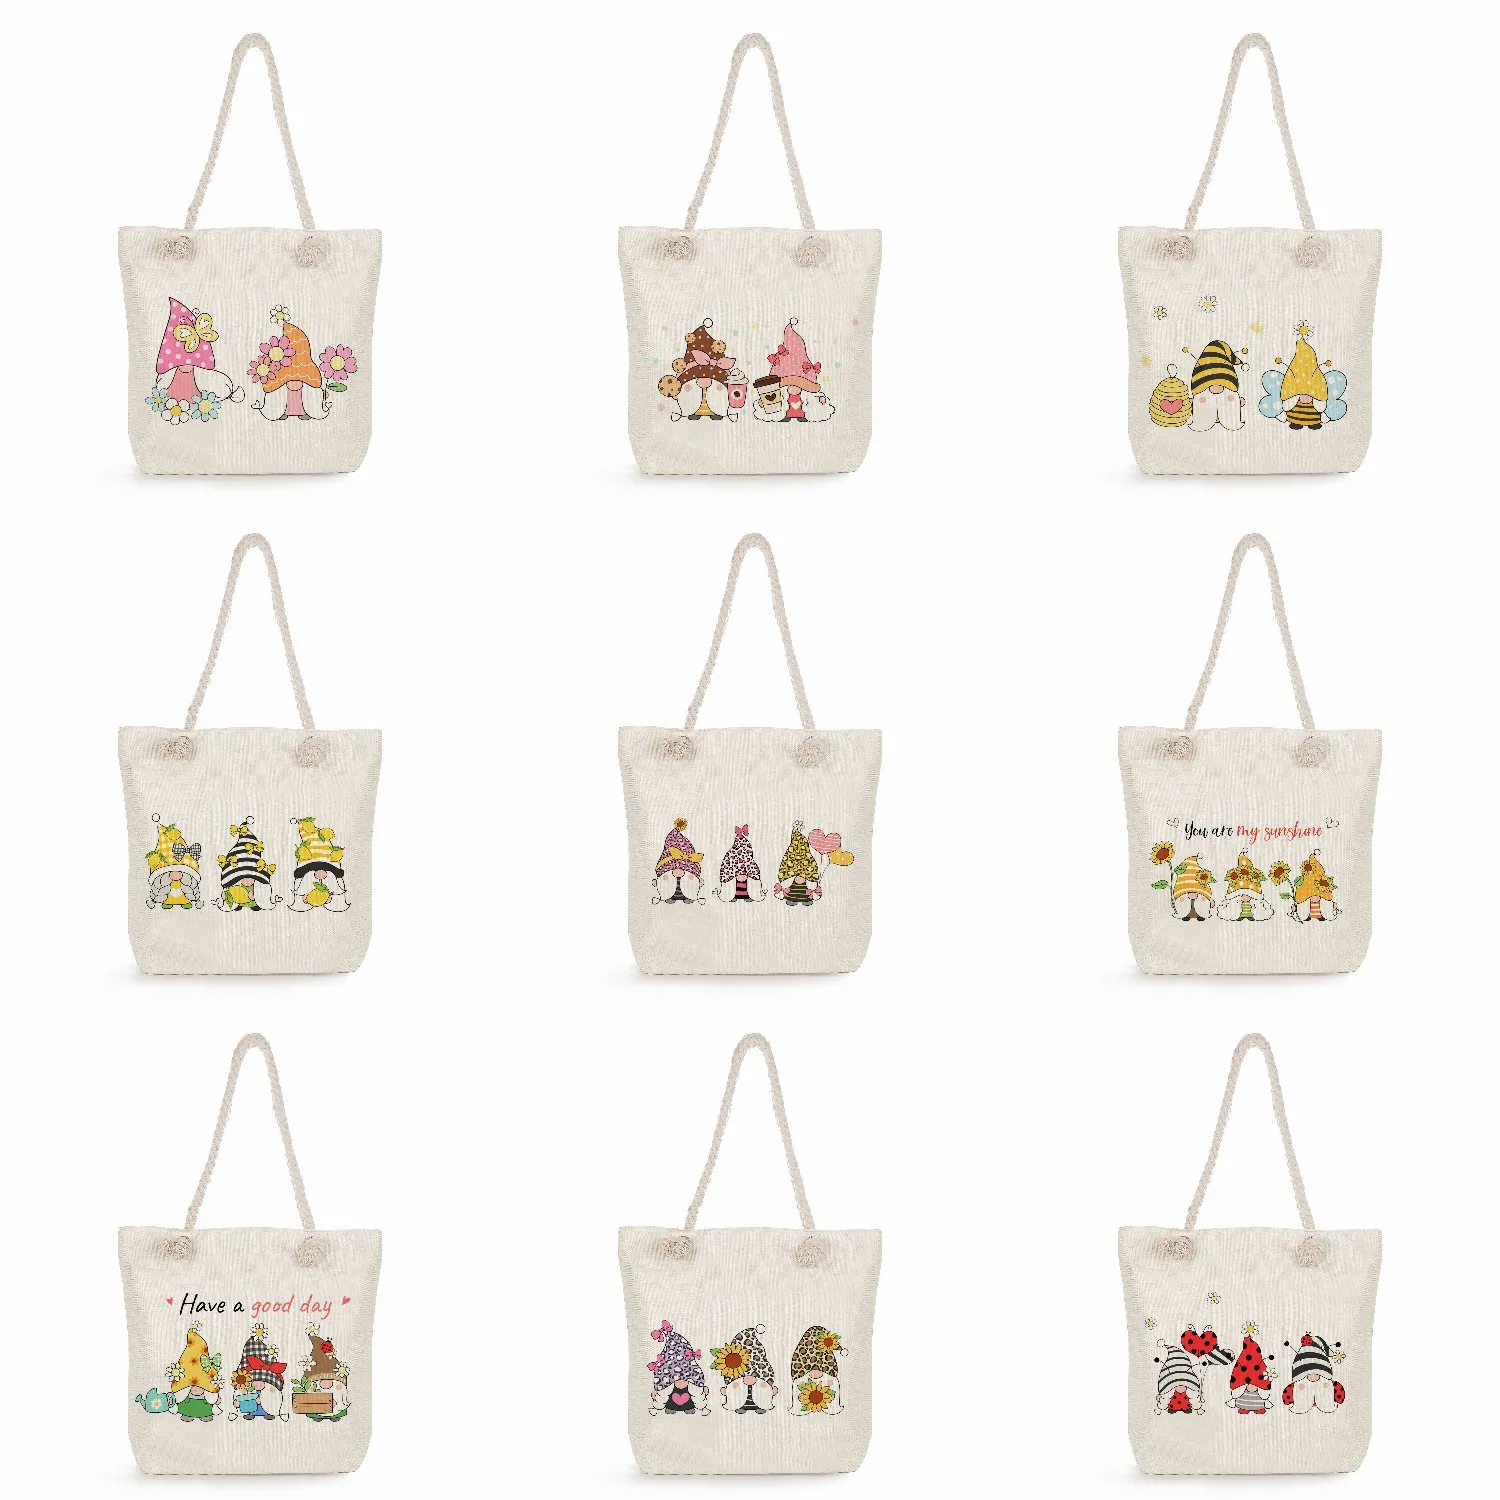 

Fashion Outdoor Shoulder Bags Cartoon Women Big Shopping Bags Travel Beach Thick Rope Tote Cute Gnomes Flower Printed Handbags